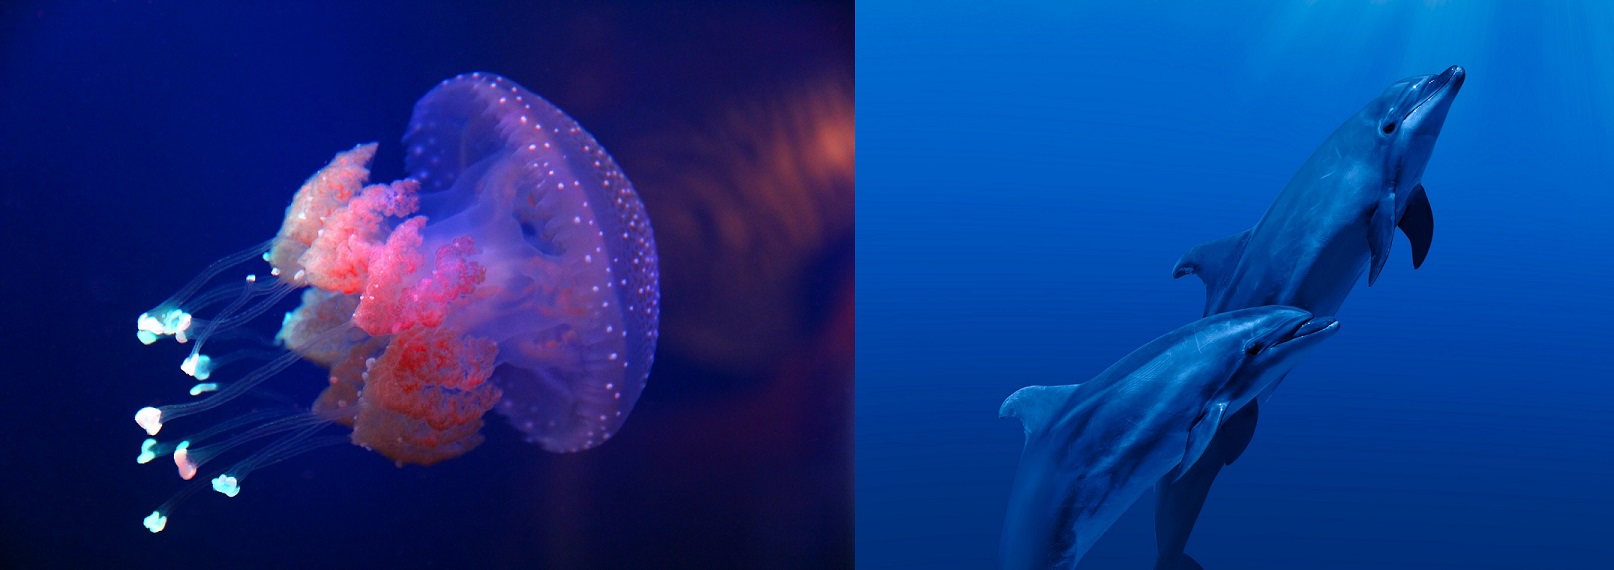 Jellyfish/Porpoise - Session I